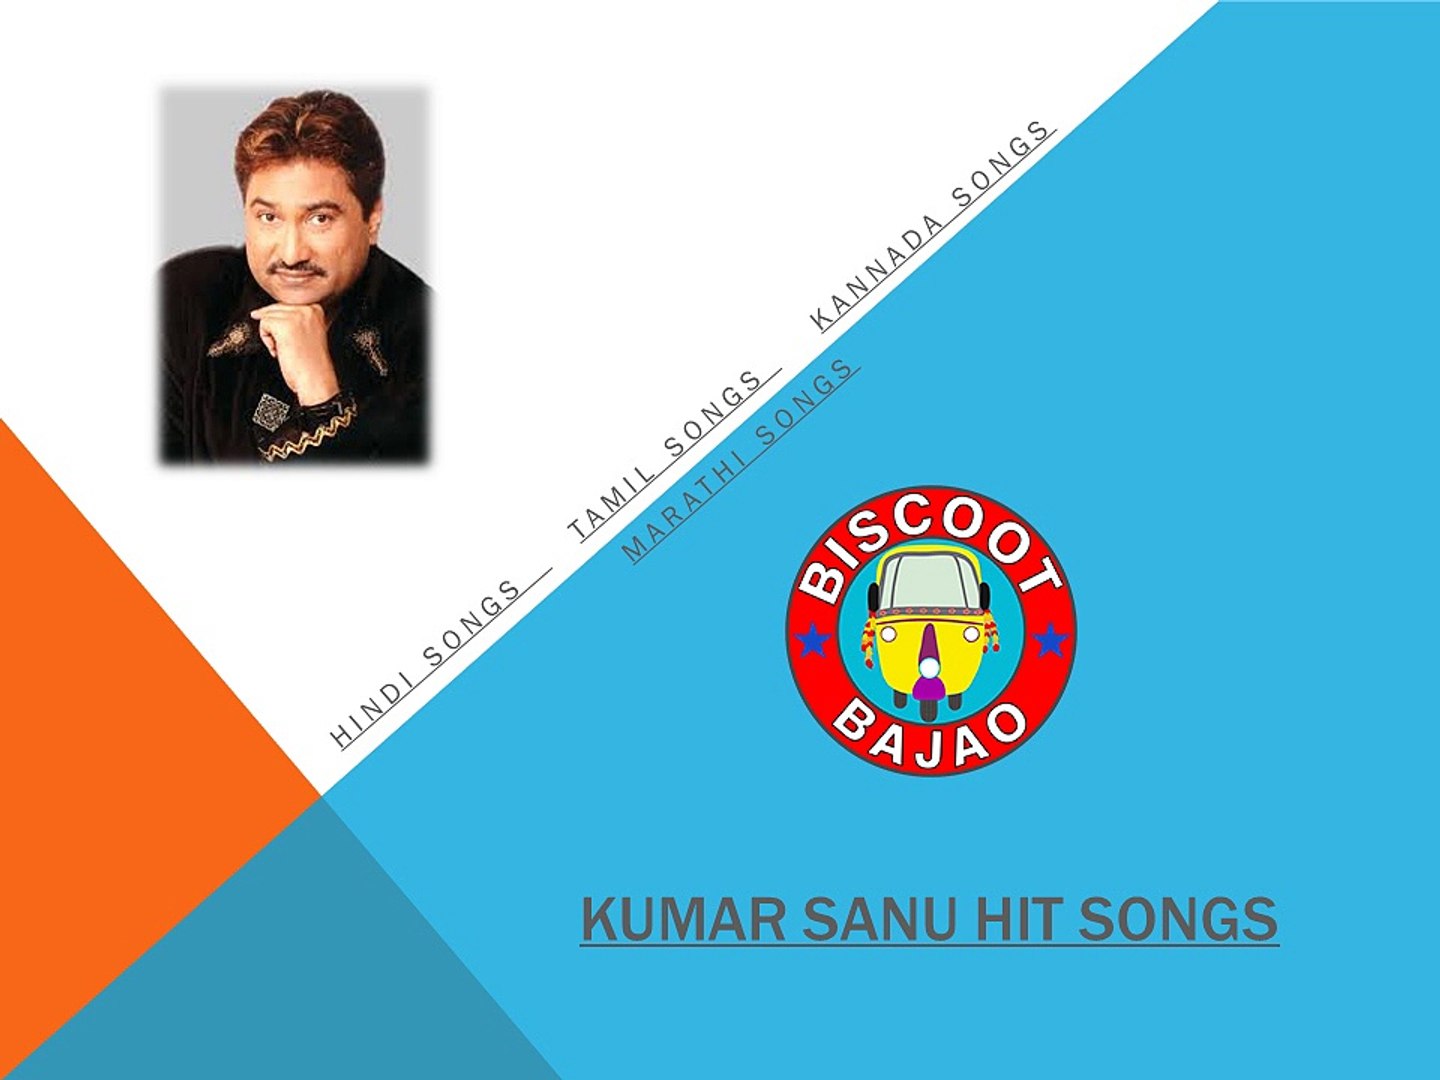 Kumar sanu hit songs | Superhit Bollywood Songs | Superhit Bollywood Songs only on bajao.biscoot.com